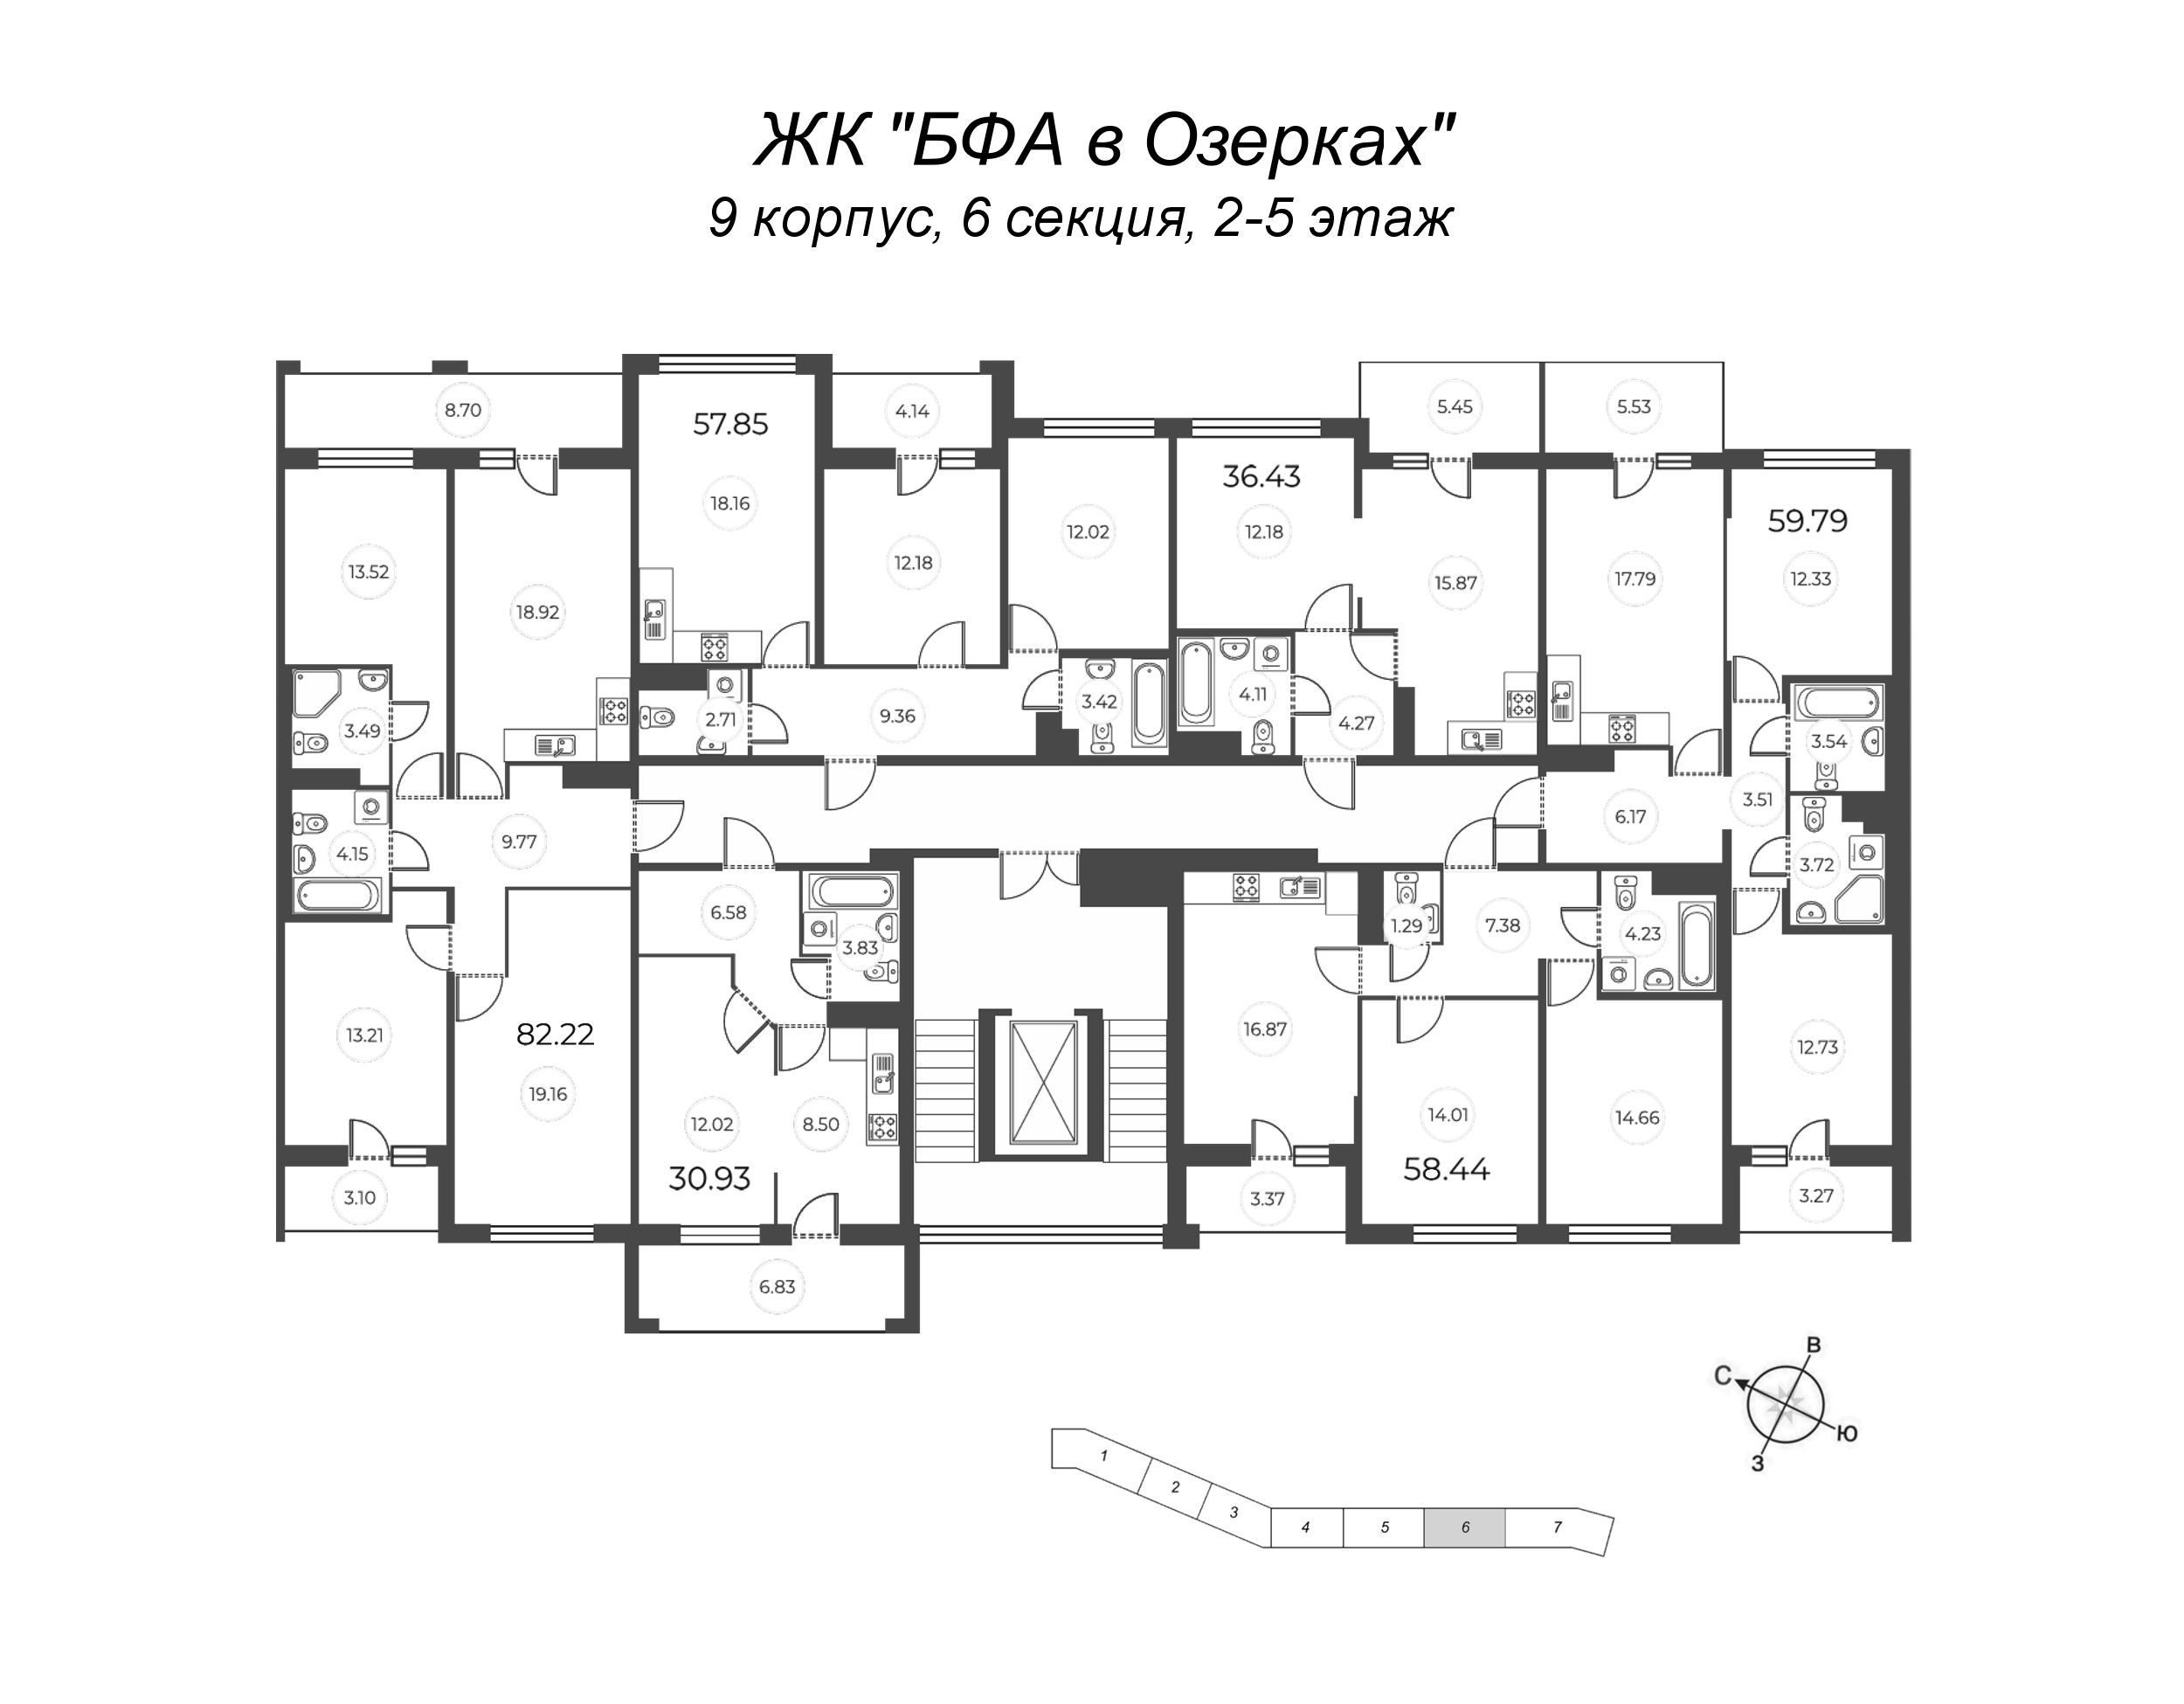 4-комнатная (Евро) квартира, 88.12 м² - планировка этажа